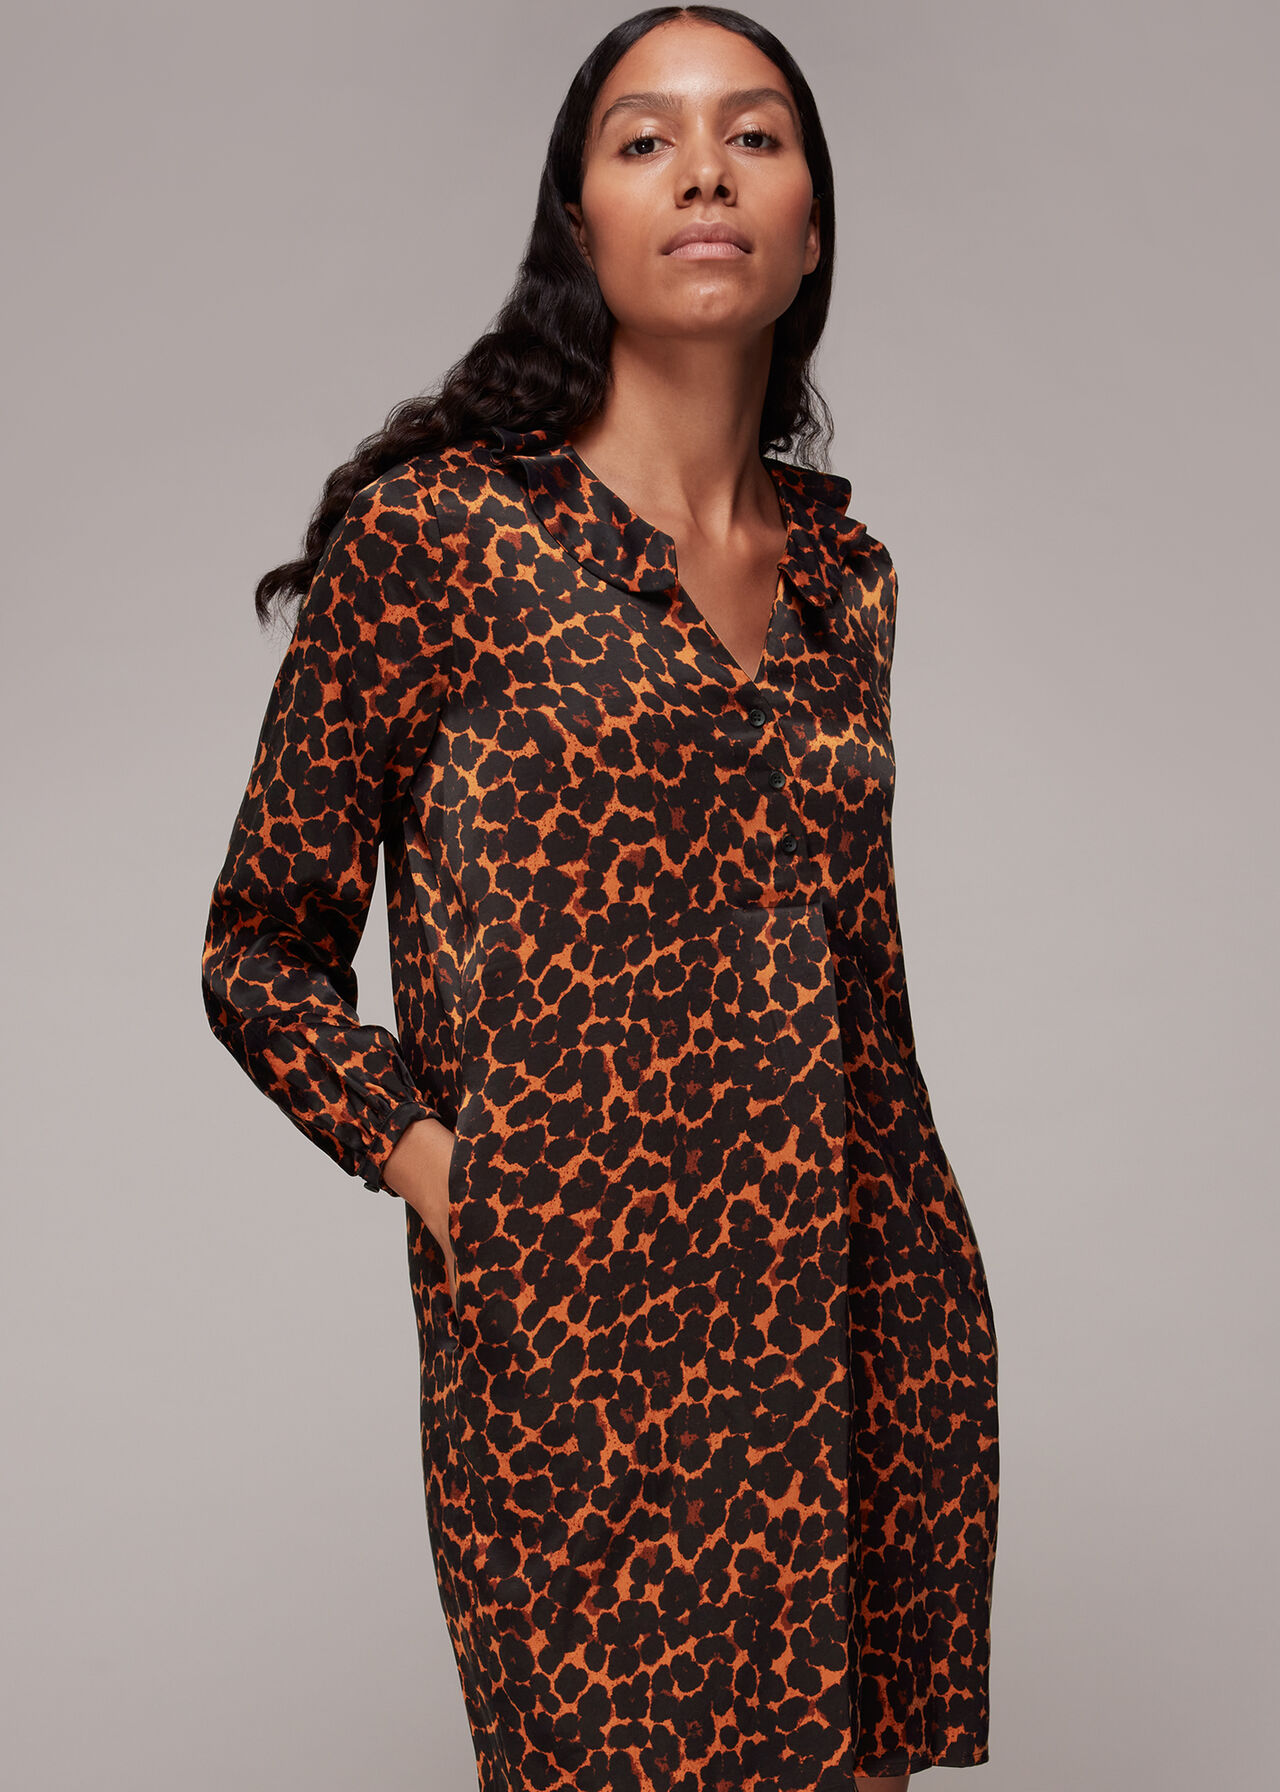 Leopard Print Smudge Animal Frill Dress | WHISTLES | Whistles UK